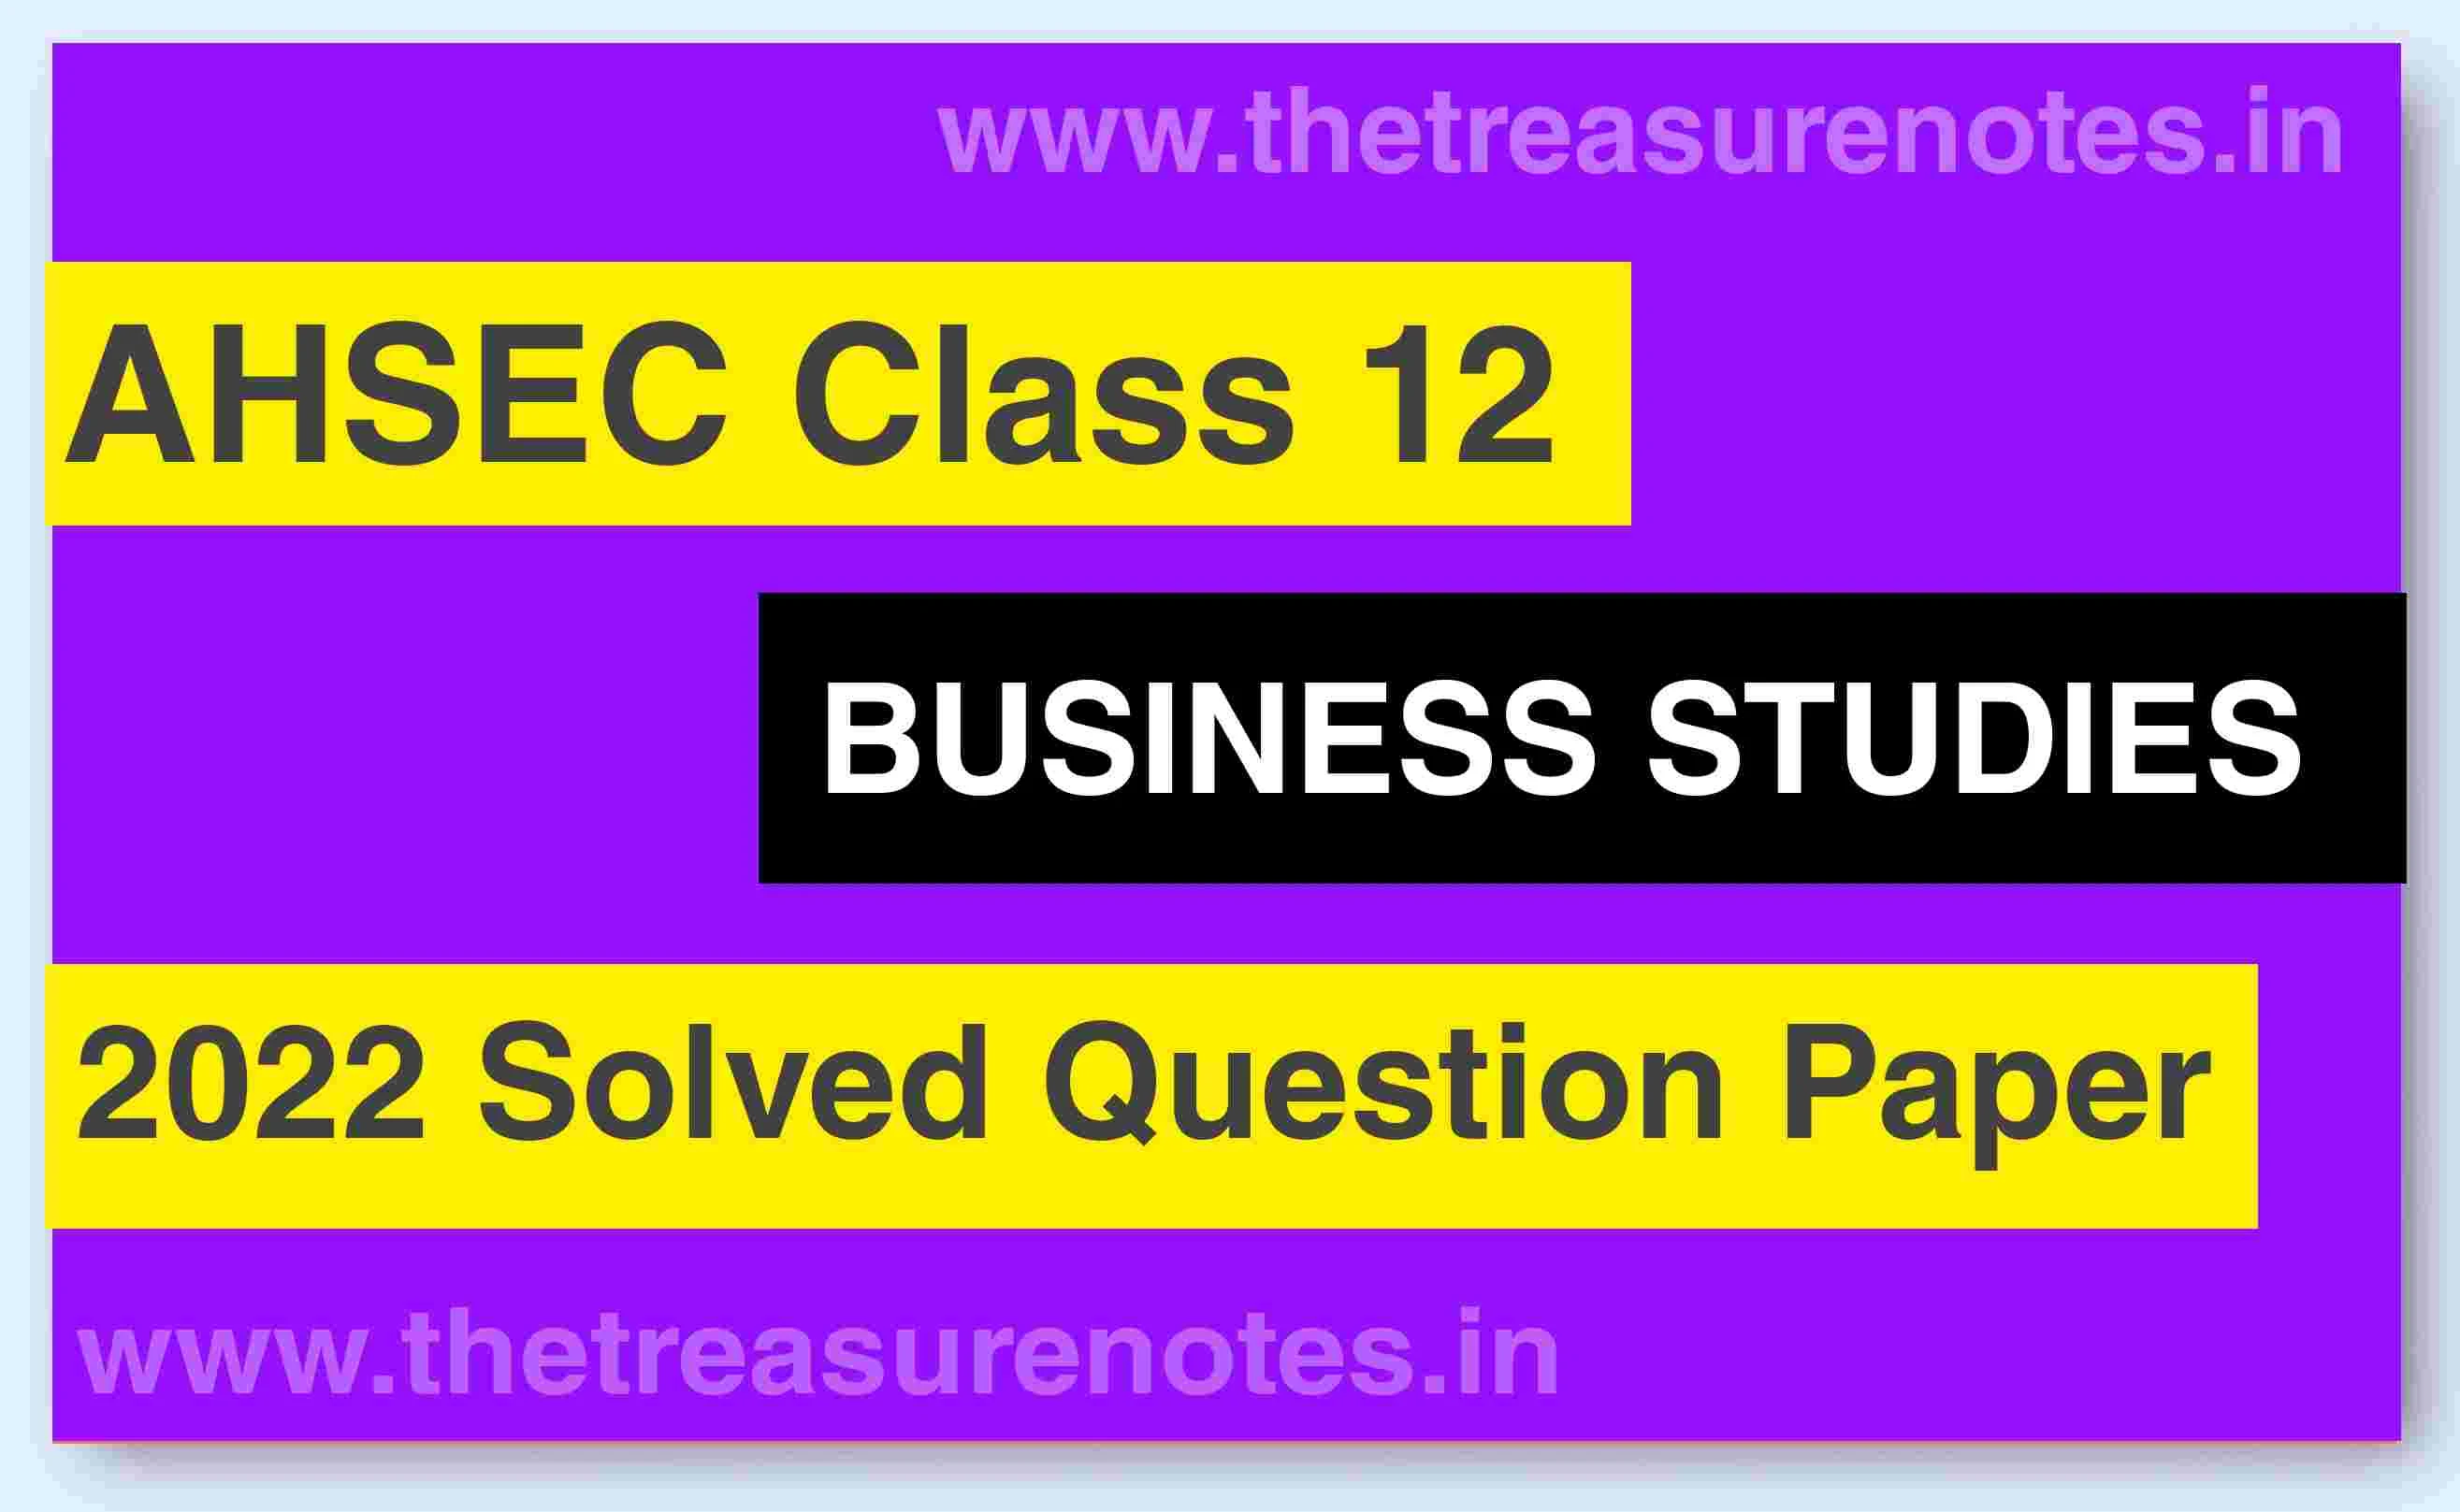 AHSEC Class 12 Business Studies Solved Question Paper 2022  | HS 2nd Year Business Studies Question Paper Solution 2022